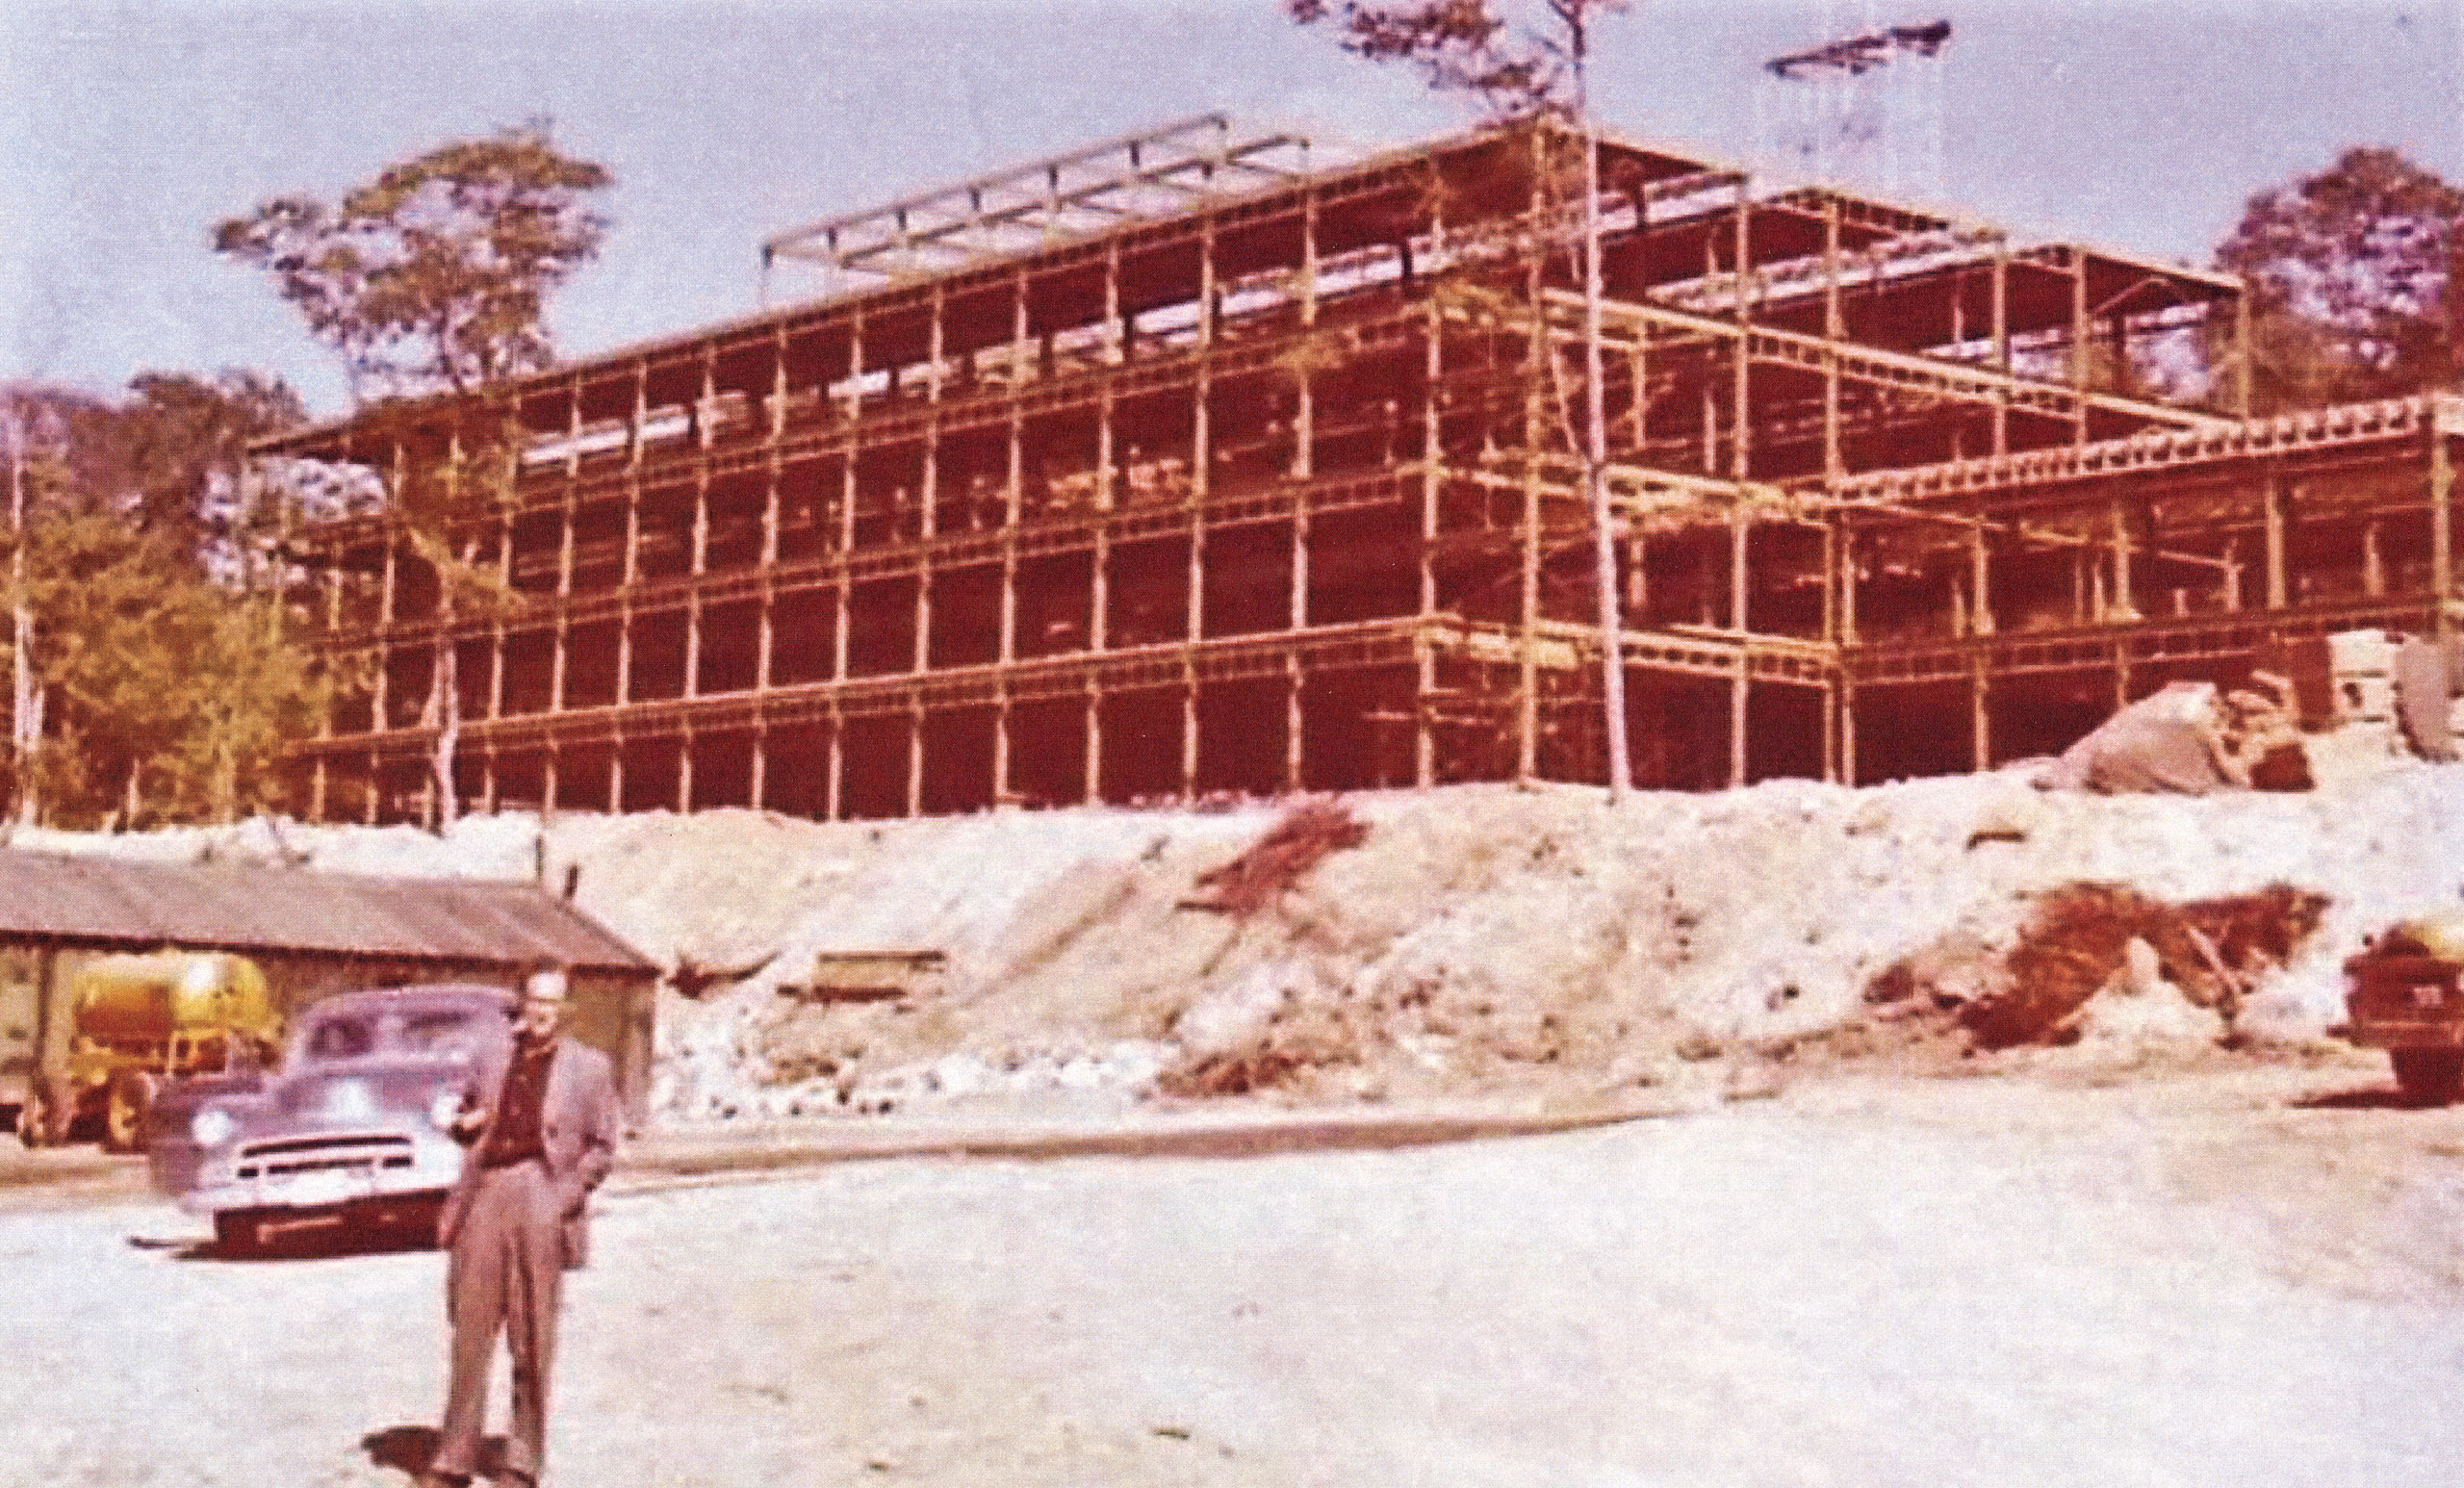 St. Joseph’s Hospital, Elliot Lake Ontario - Construction 1959